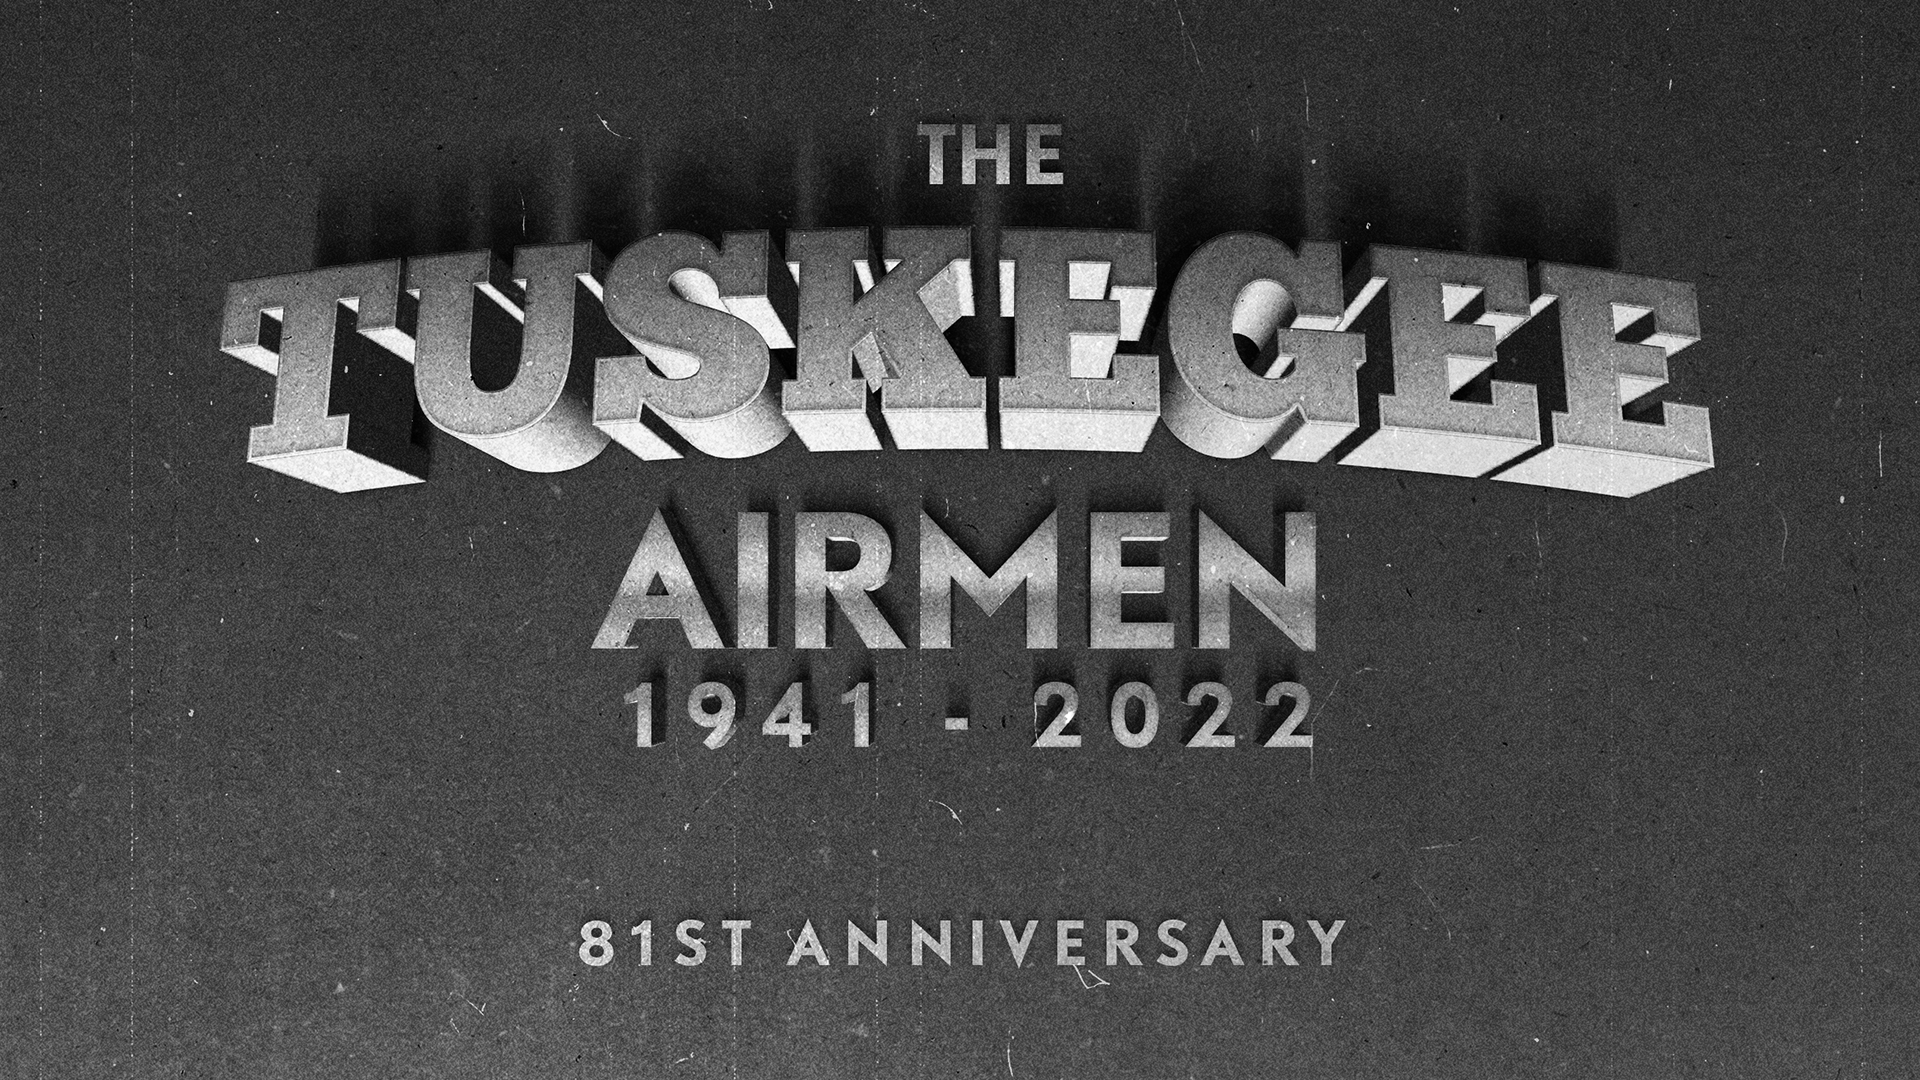 Tuskegee Airmen 81st Anniversary Tribute